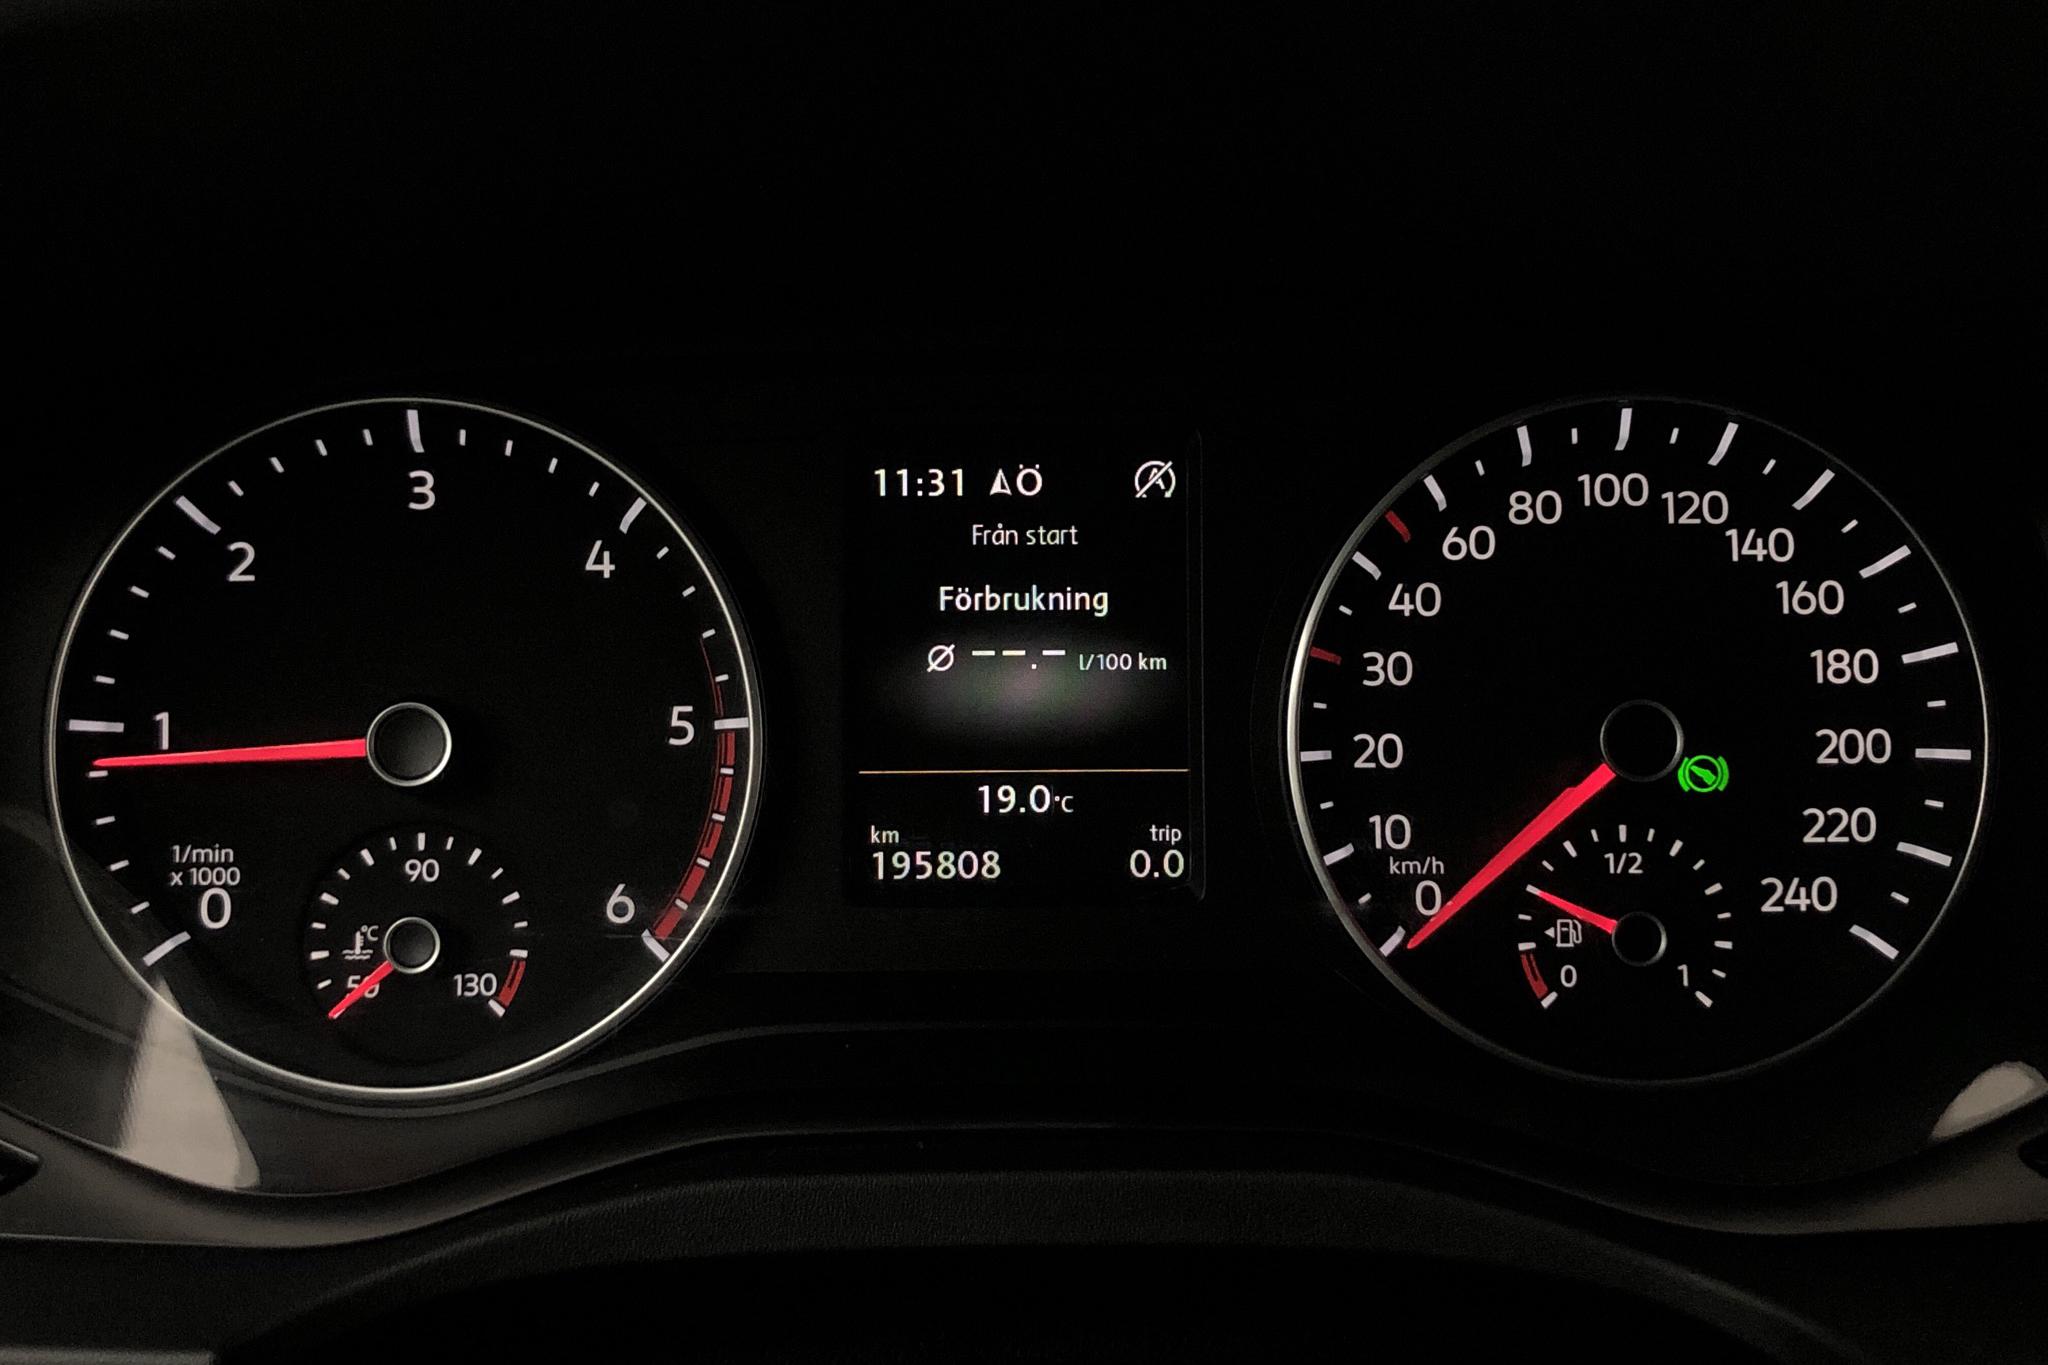 VW Amarok 3.0 TDI 4motion (258hk) - 195 810 km - Automatic - white - 2019